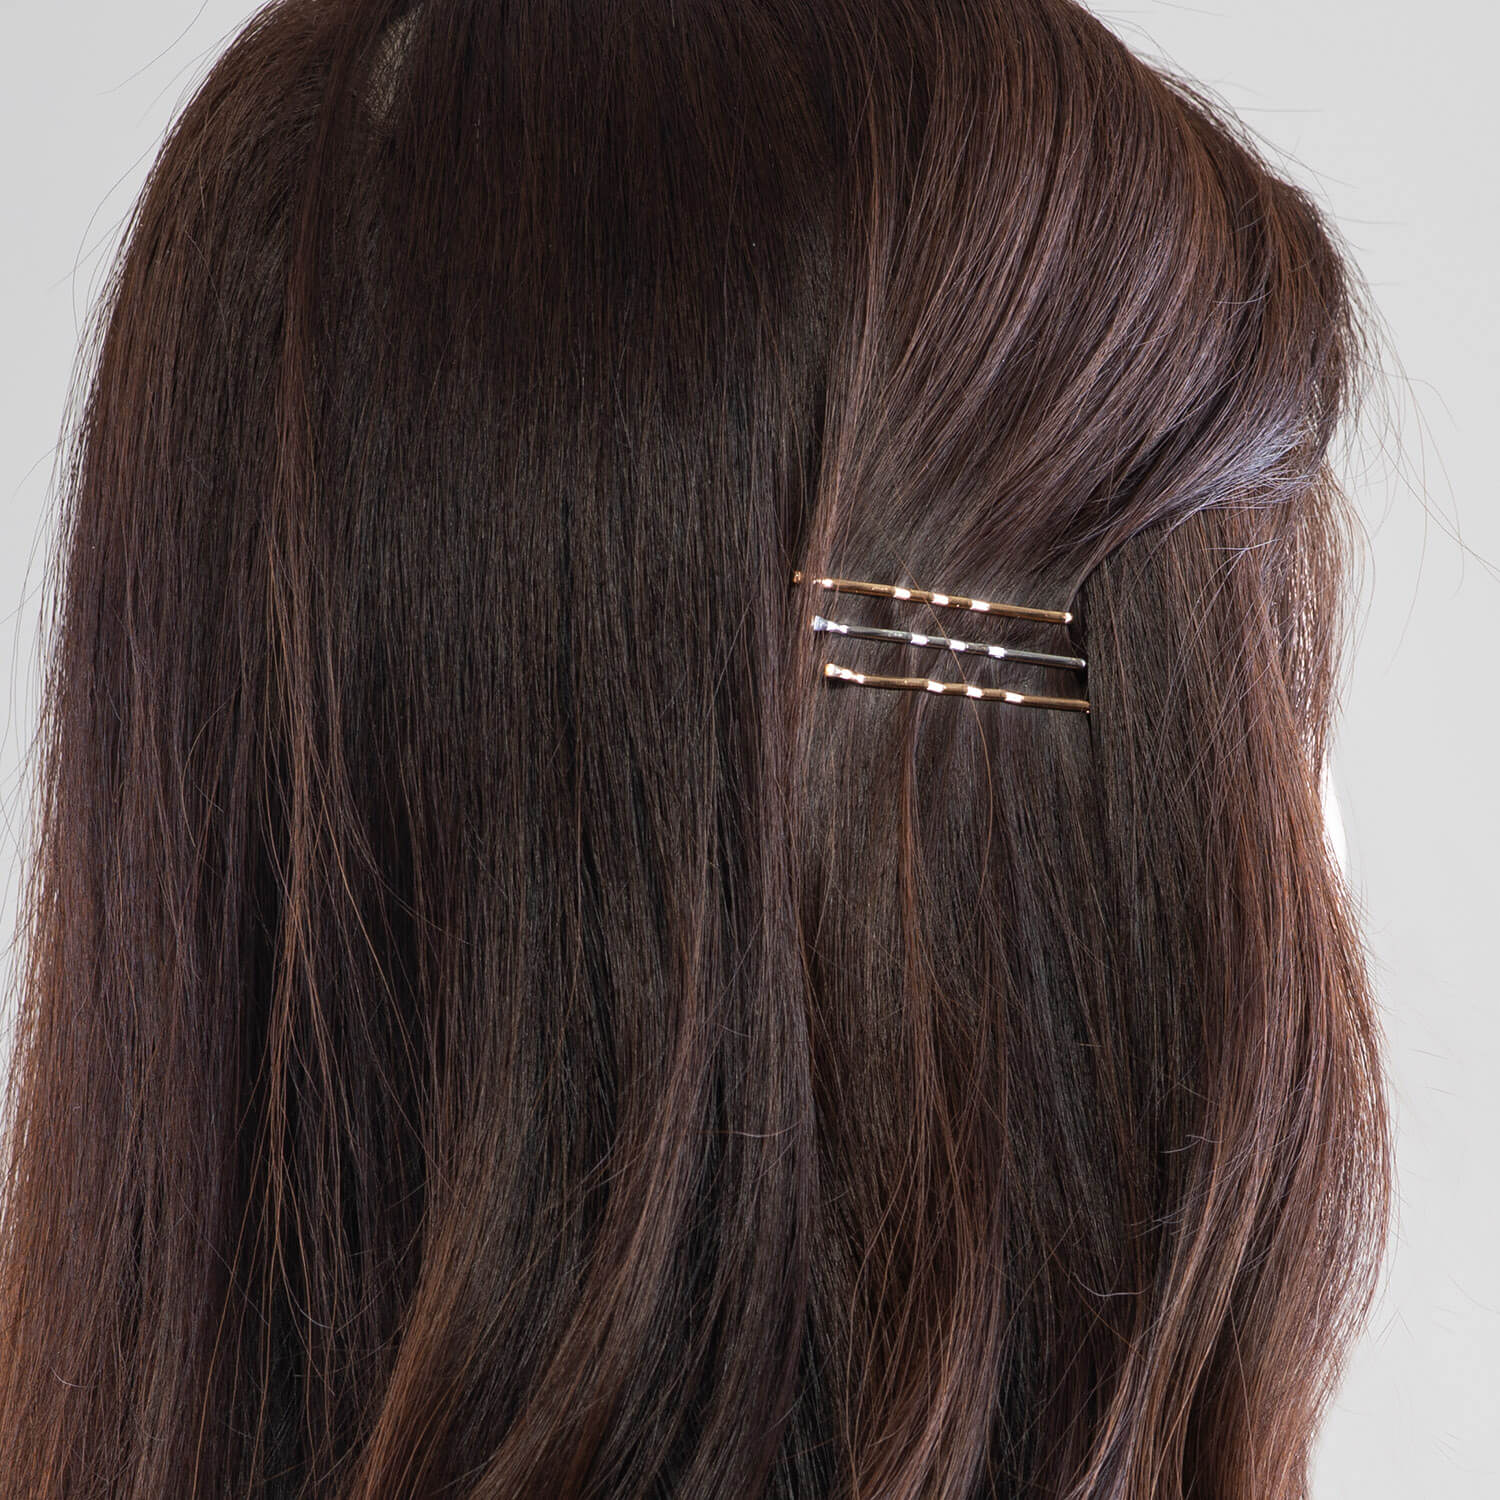 Cute bobby pins in brunette's hair